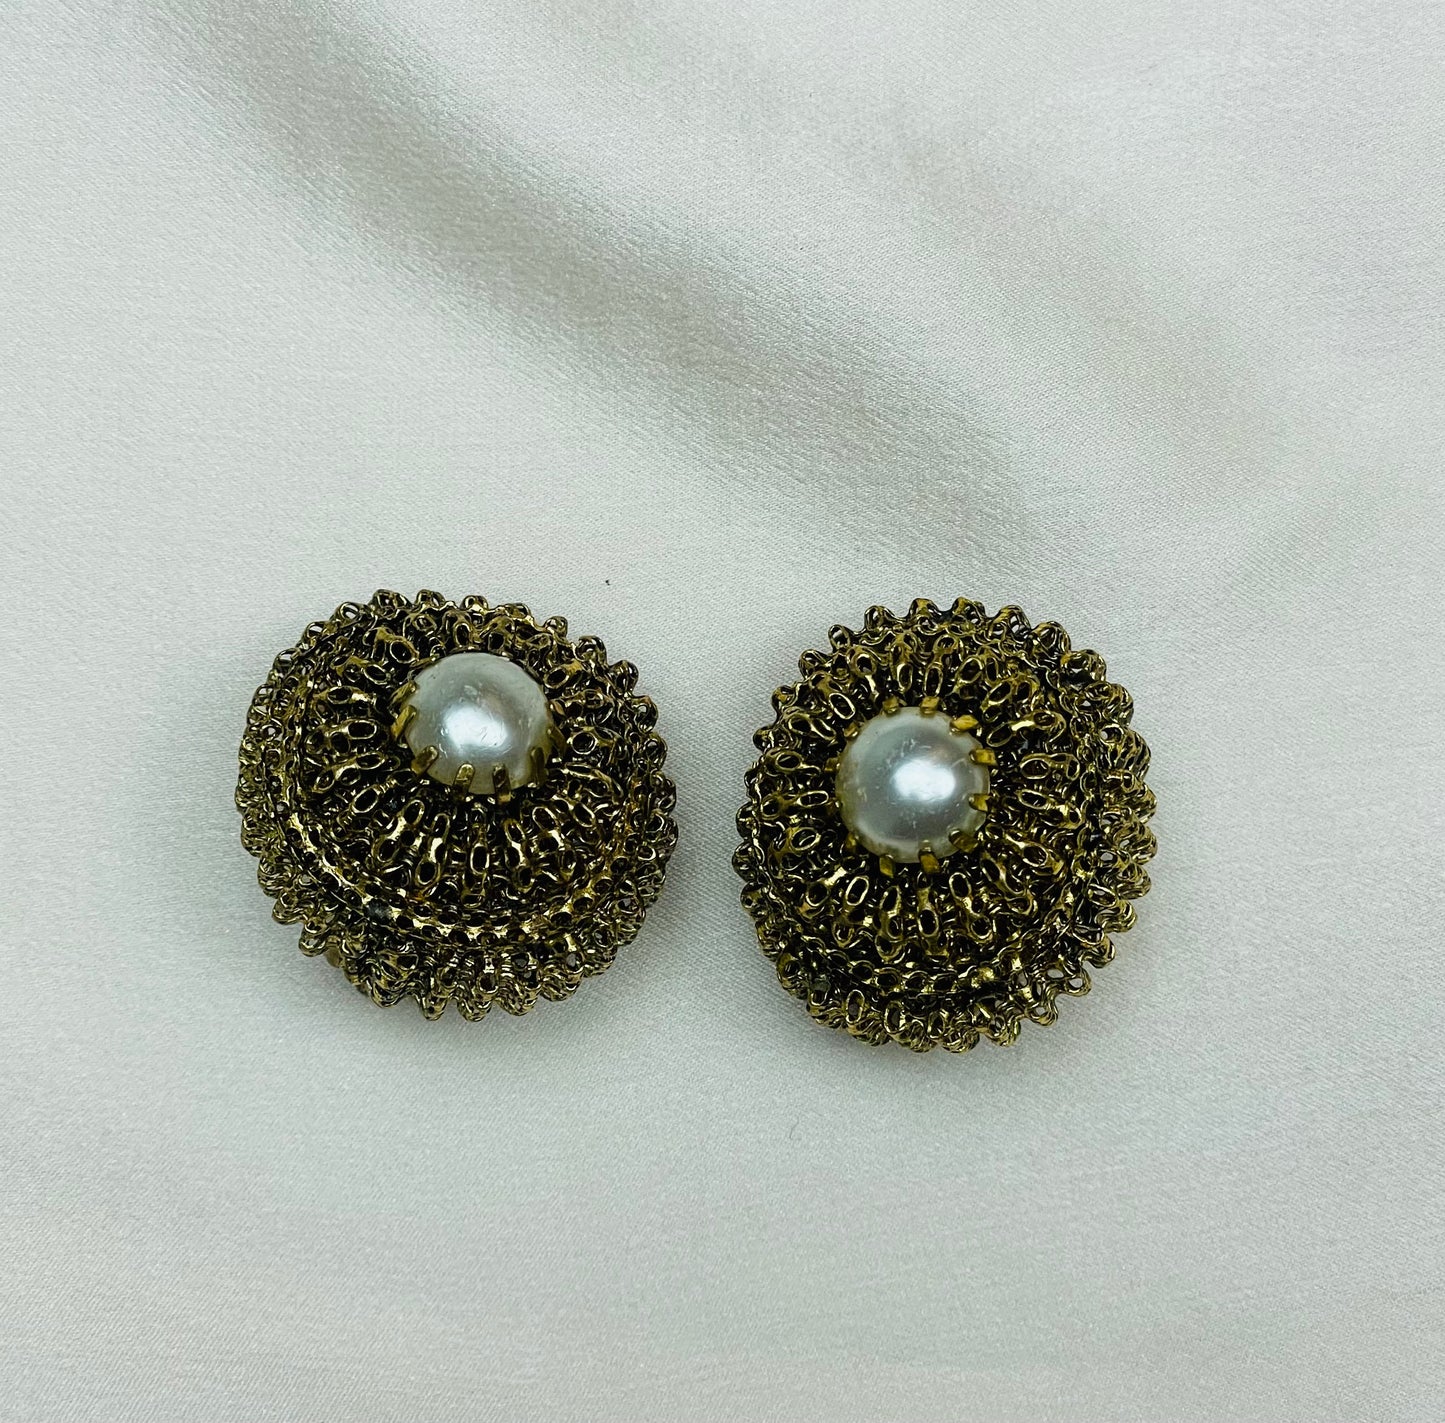 French 1960s clip earrings